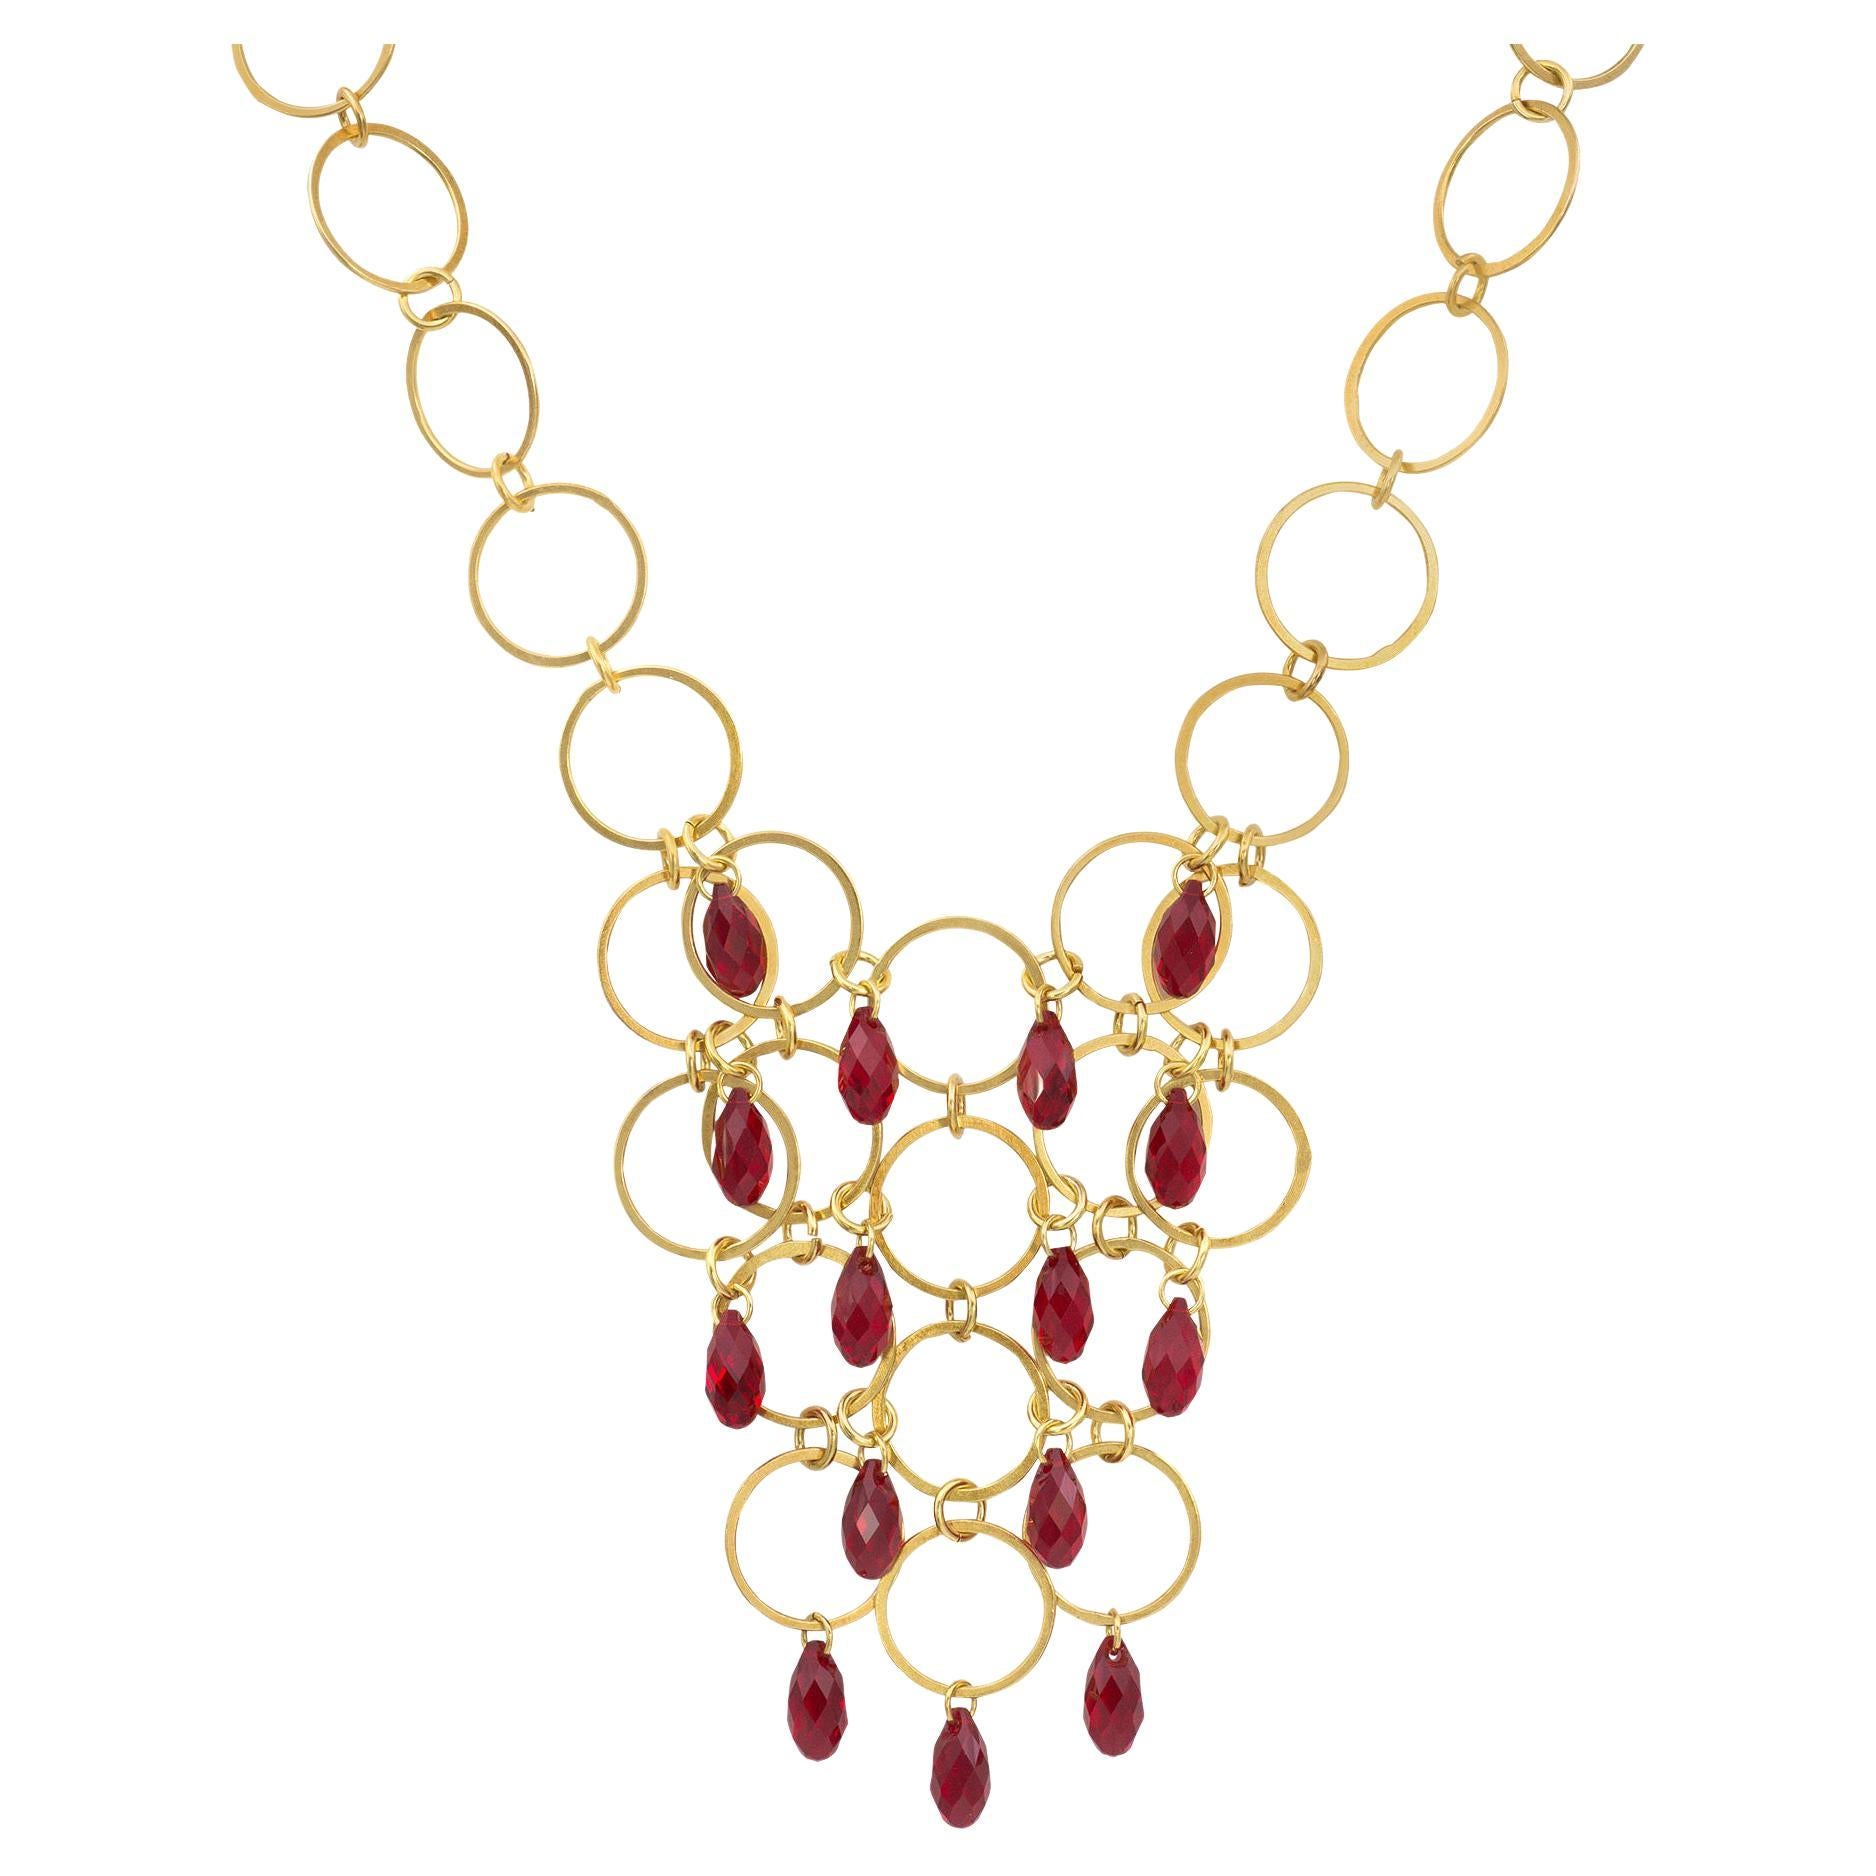 18k Gold Vermeil multi Hoop Bib Necklace with Red Swarovski Crystals For Sale